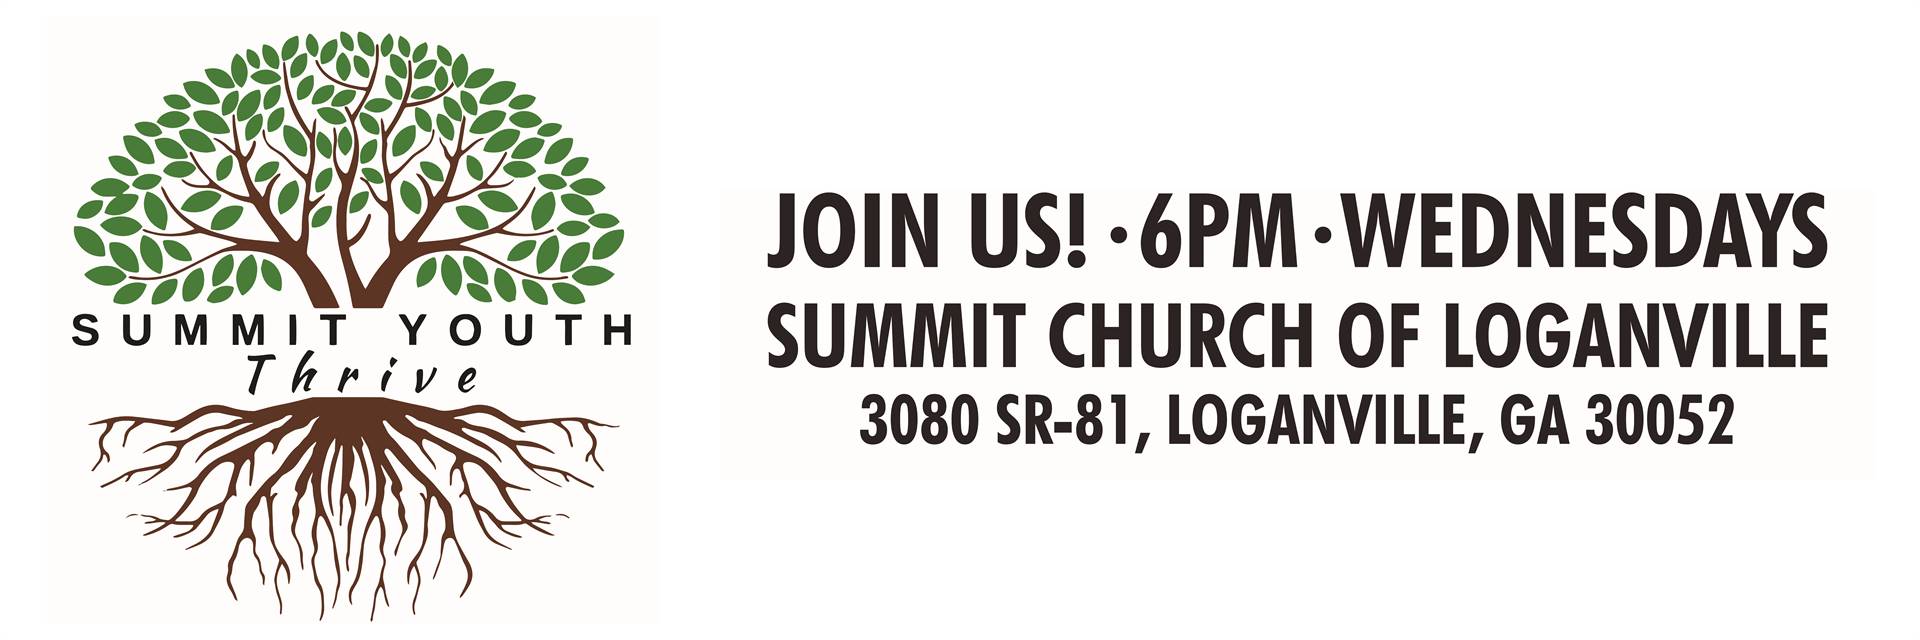 Summit Church of Loganville